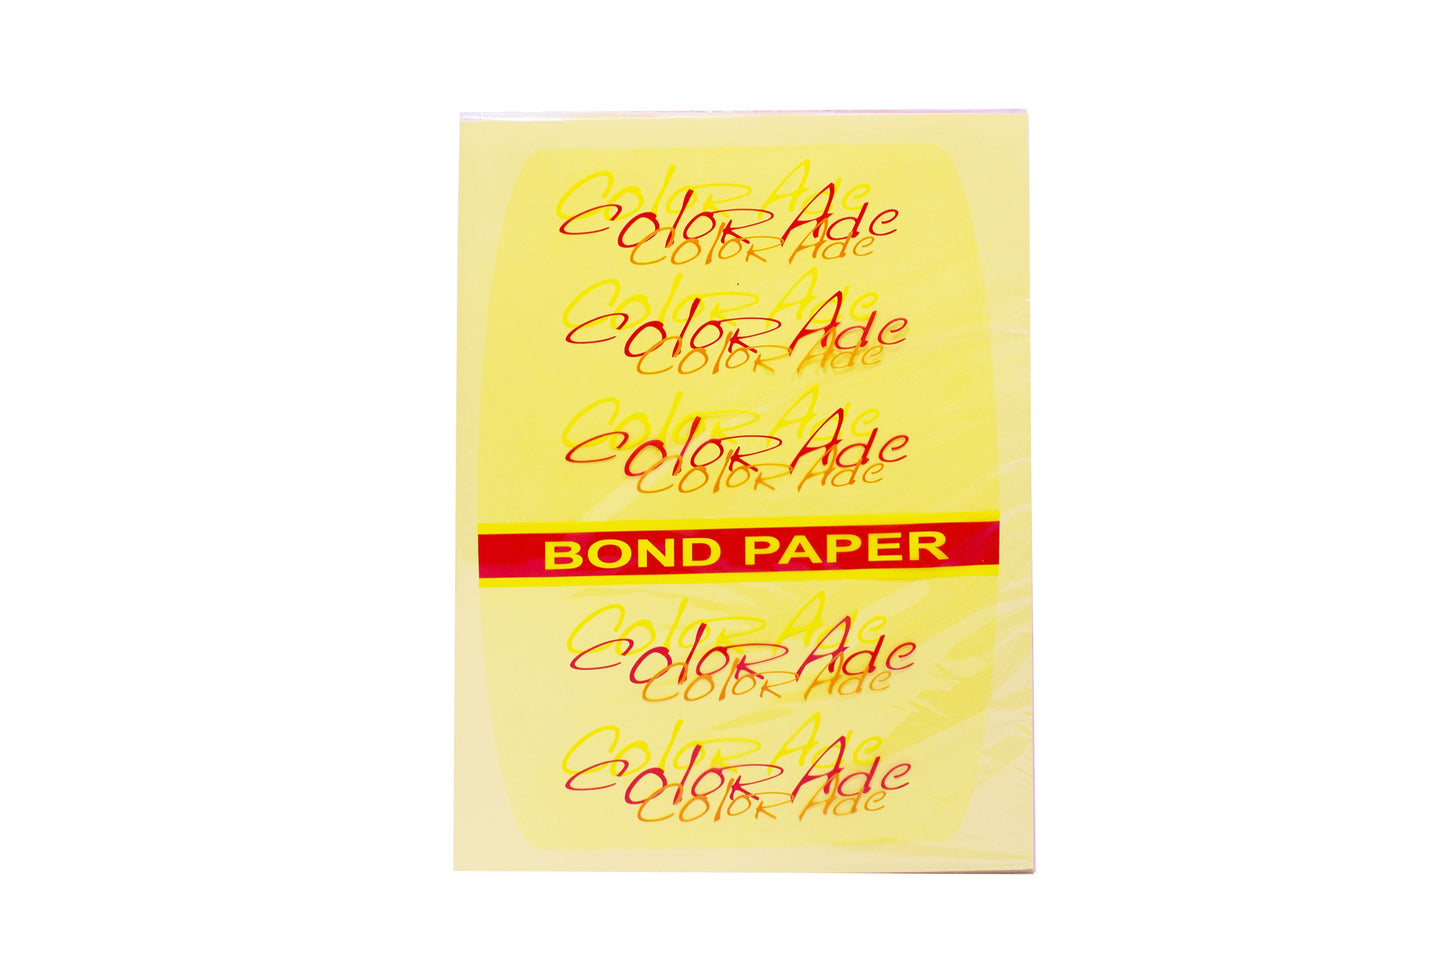 Colorade Bond Paper 56gsm Short